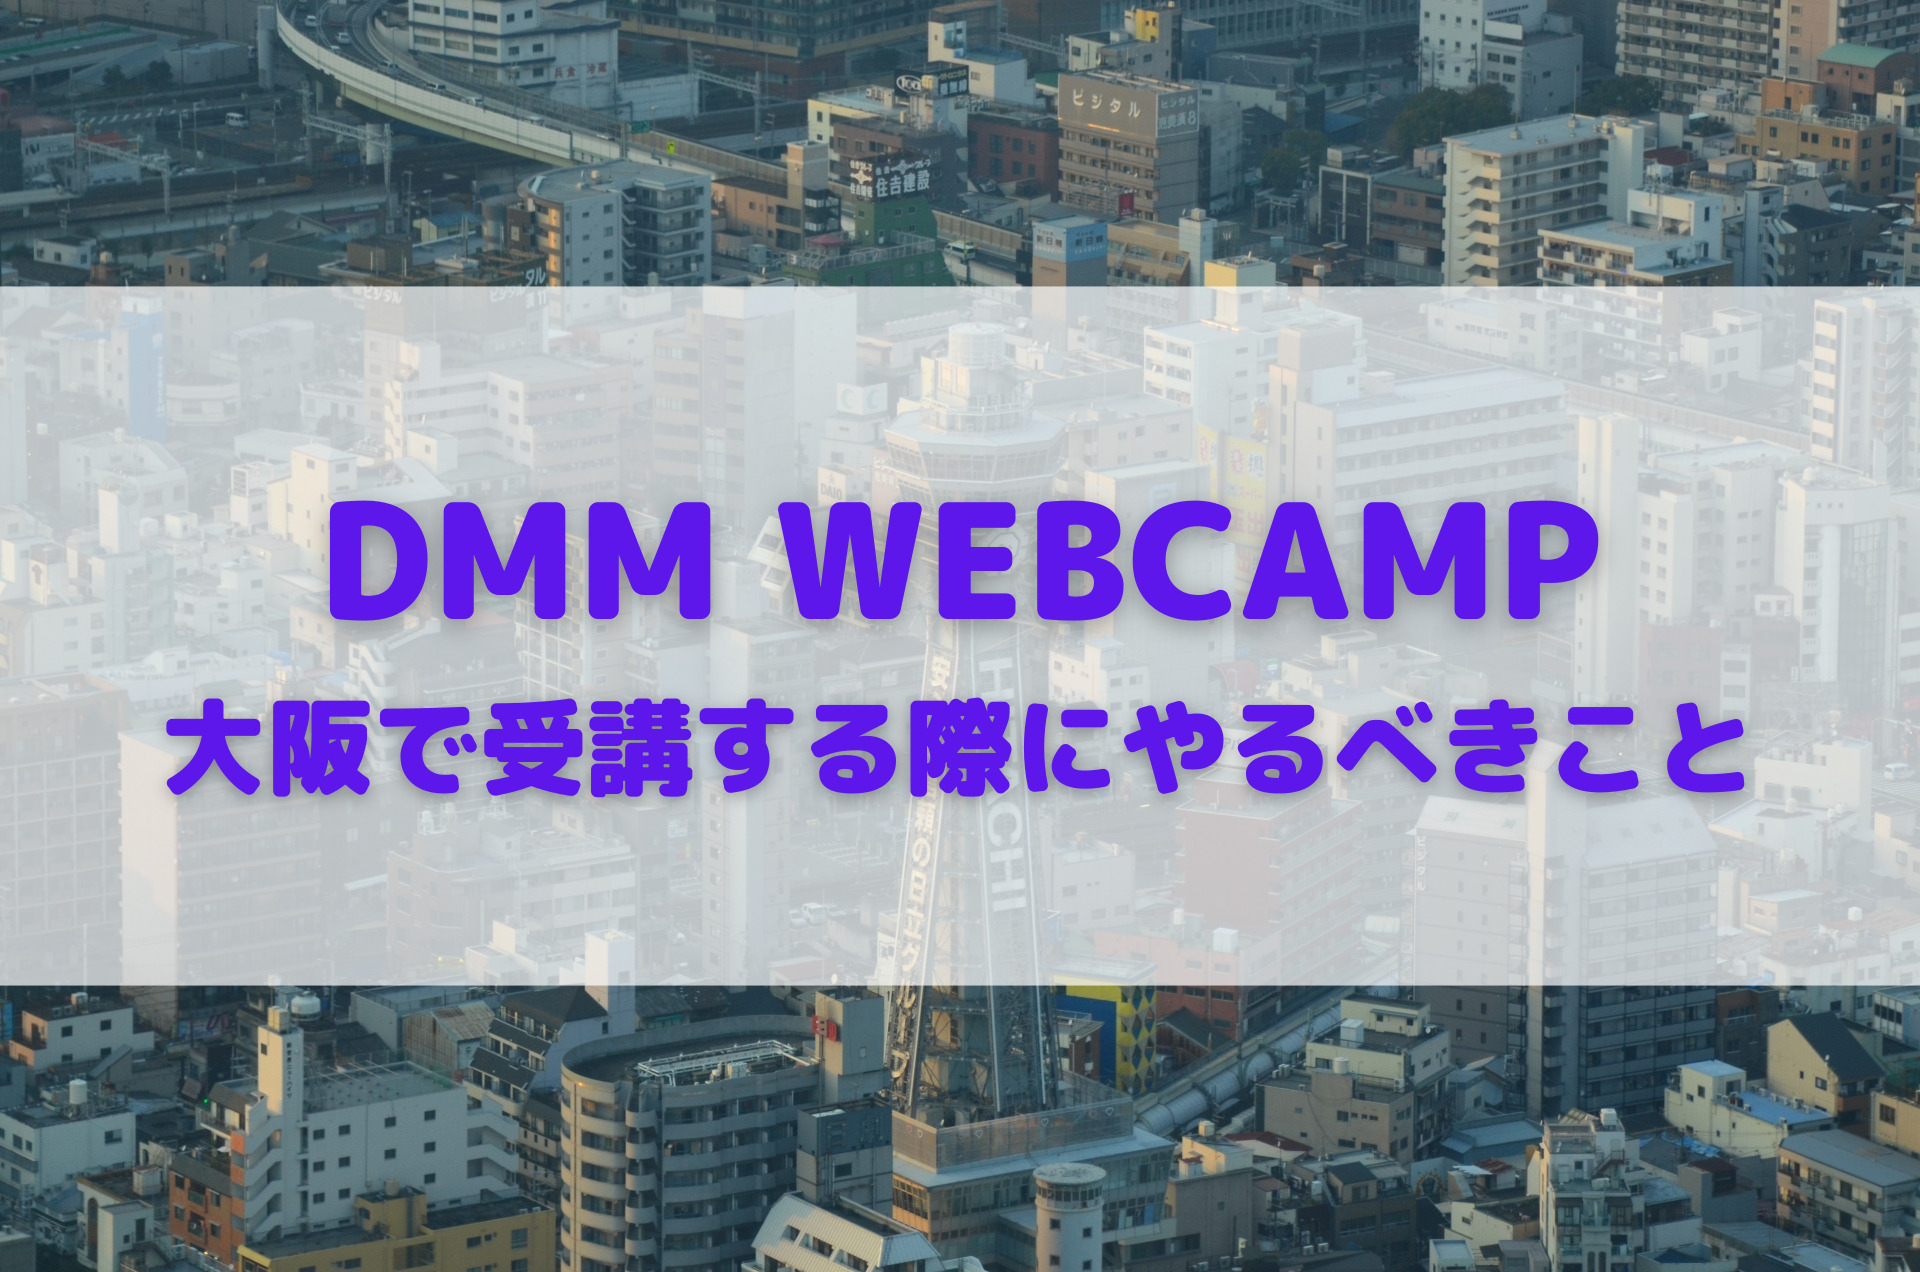 DMM WEBCAMP大阪で受講する際にやるべきこと